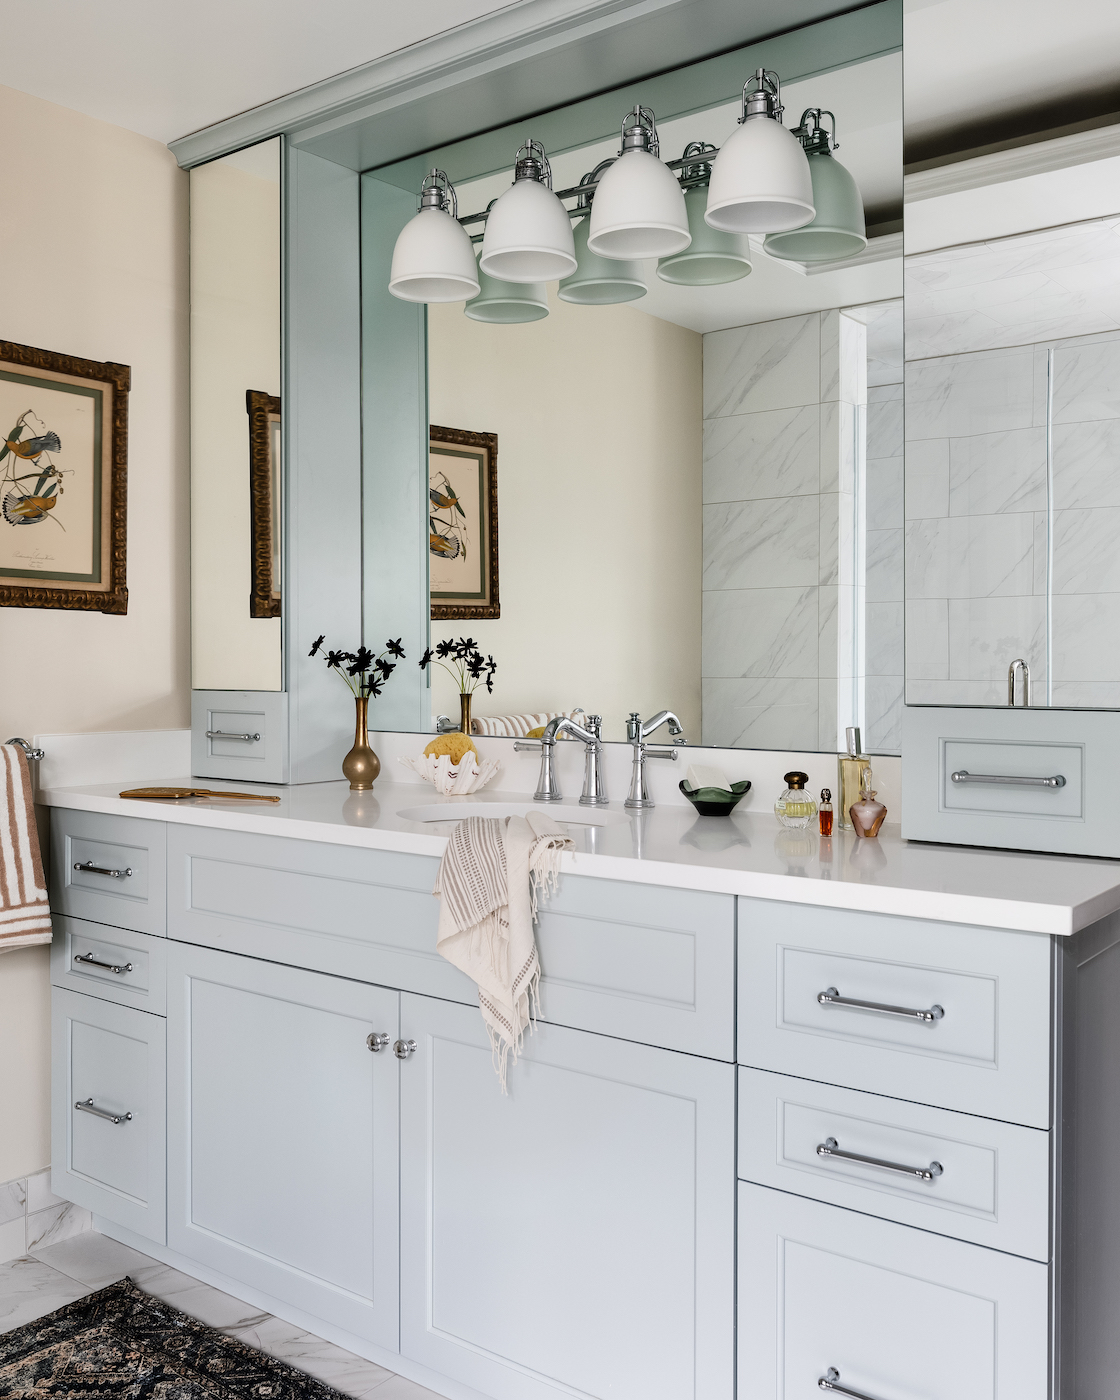 primary-bathrom-interior-design-light-blue-cabinets